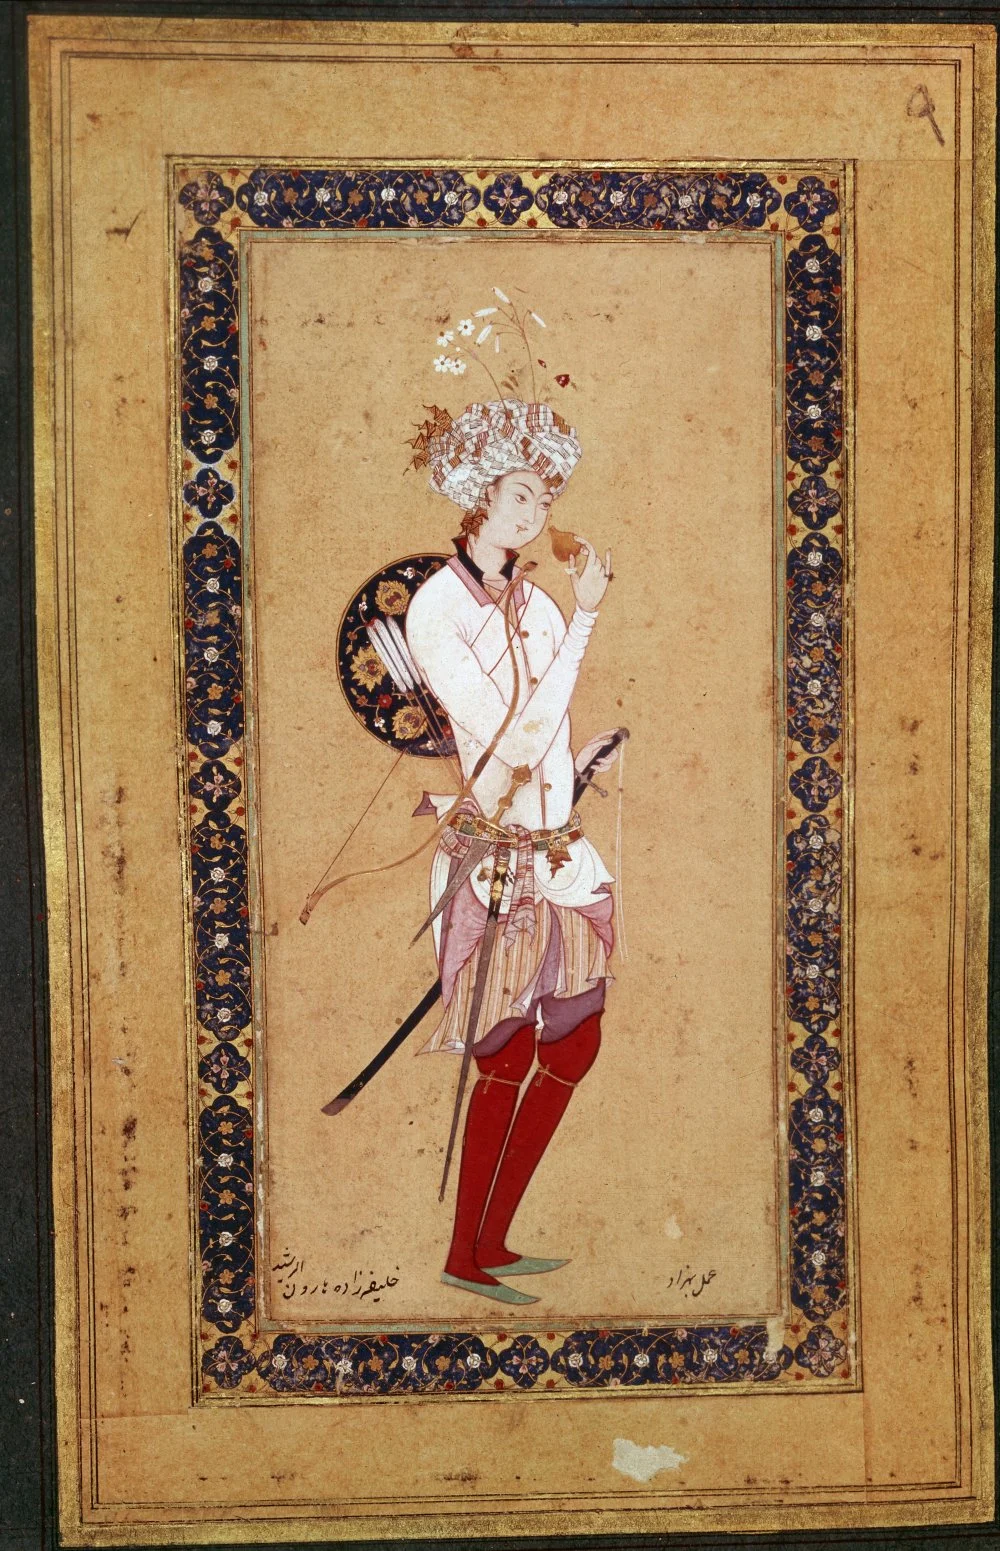 Портрет халифа Харун ар-Рашида. Национальная библиотека Франции, Париж. 17 век/Getty Images